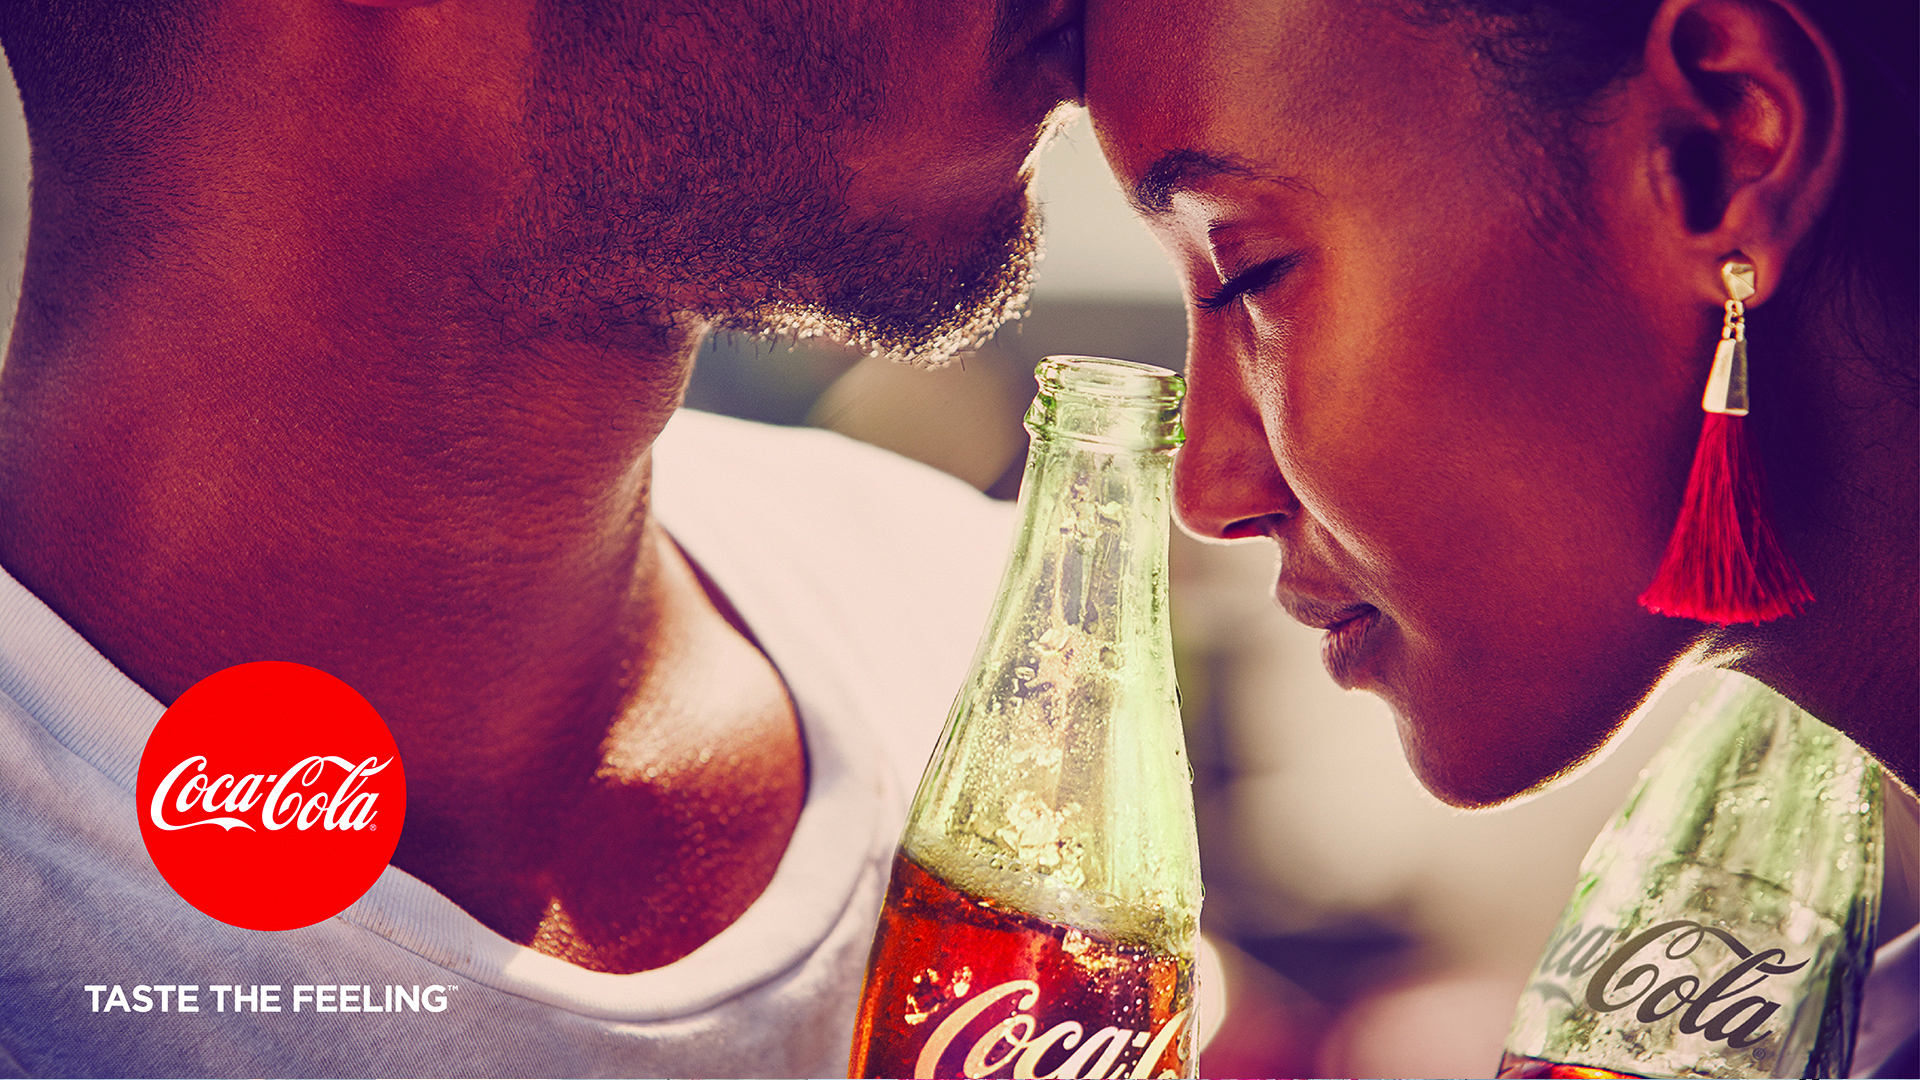 Isn t drink. Реклама колы. Кока кола реклама. Современная реклама Кока колы. Кока кола современная реклама.